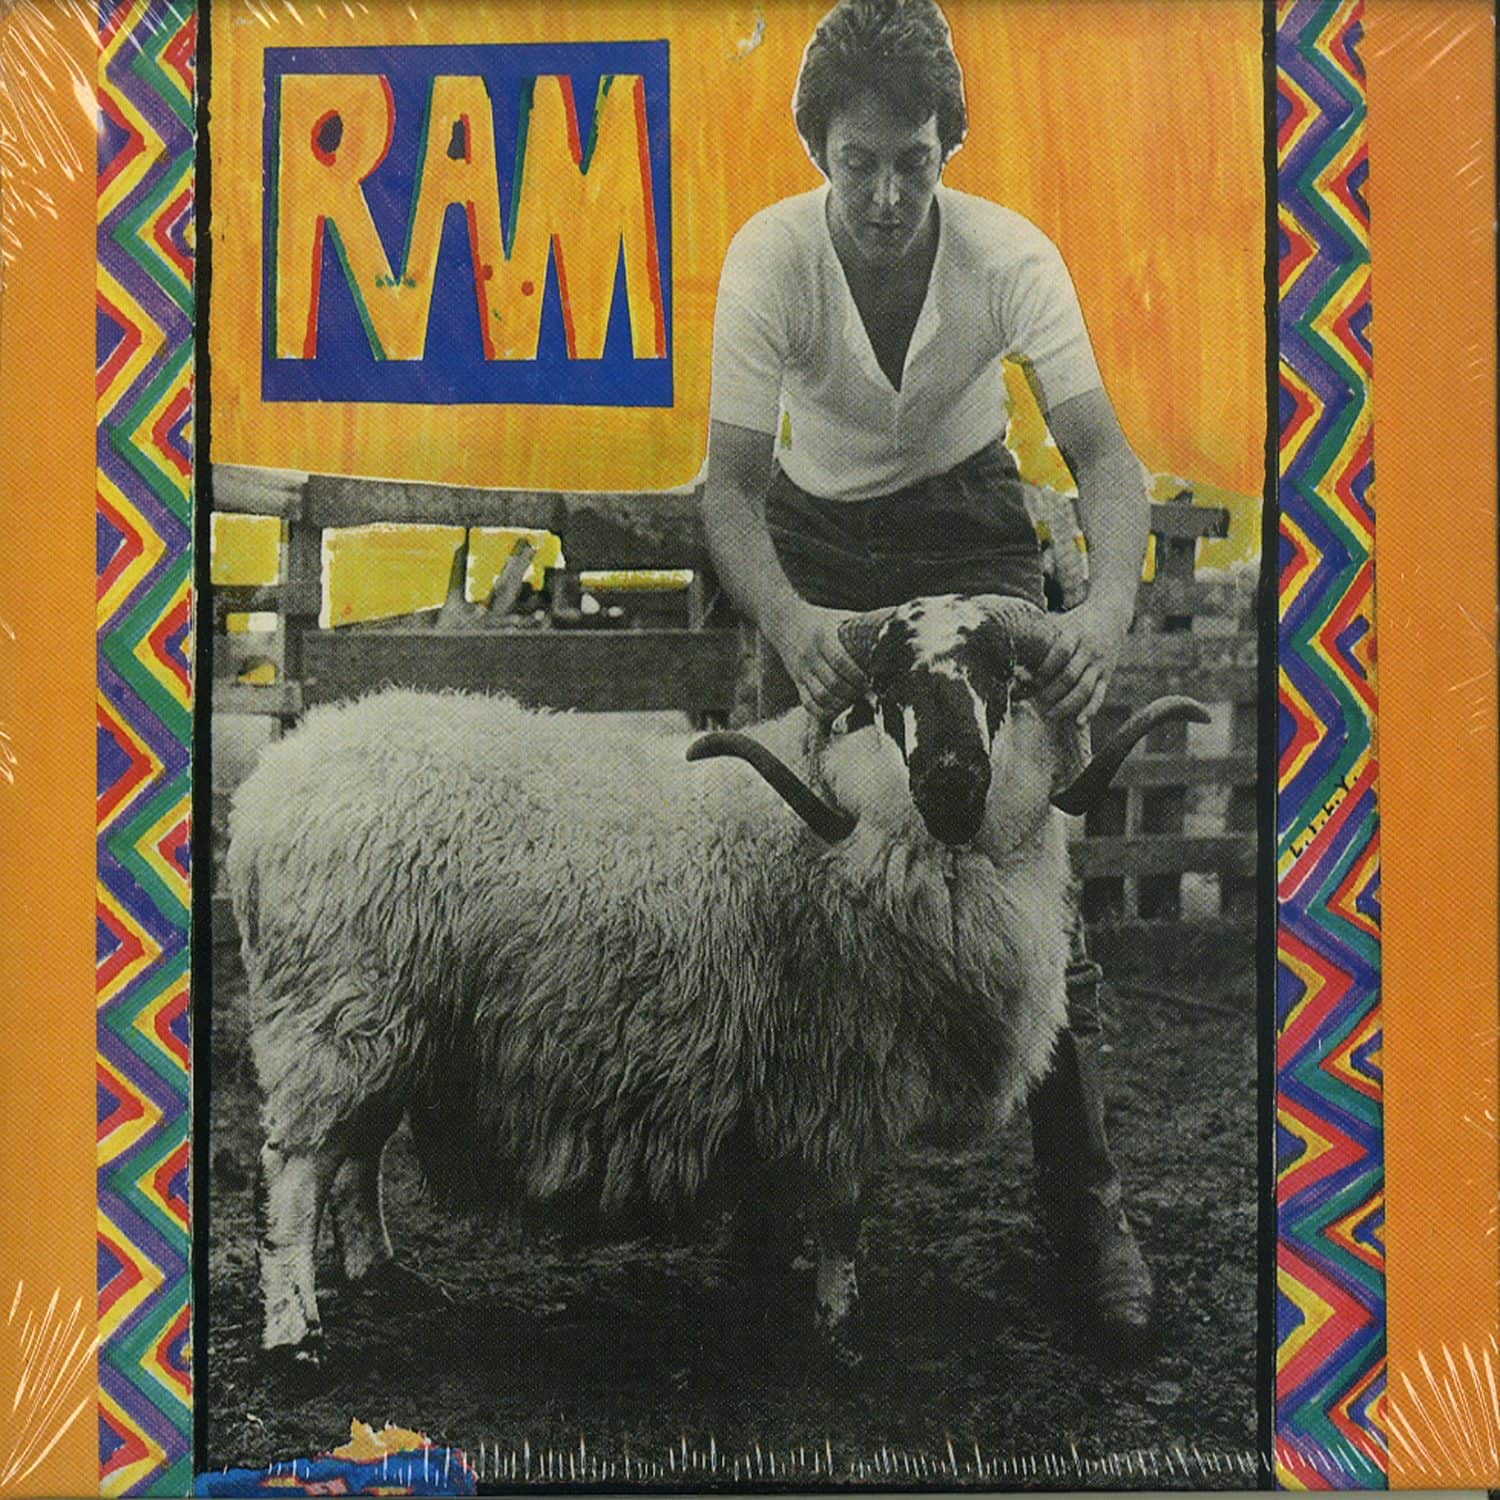 Paul & Linda McCartney - RAM 